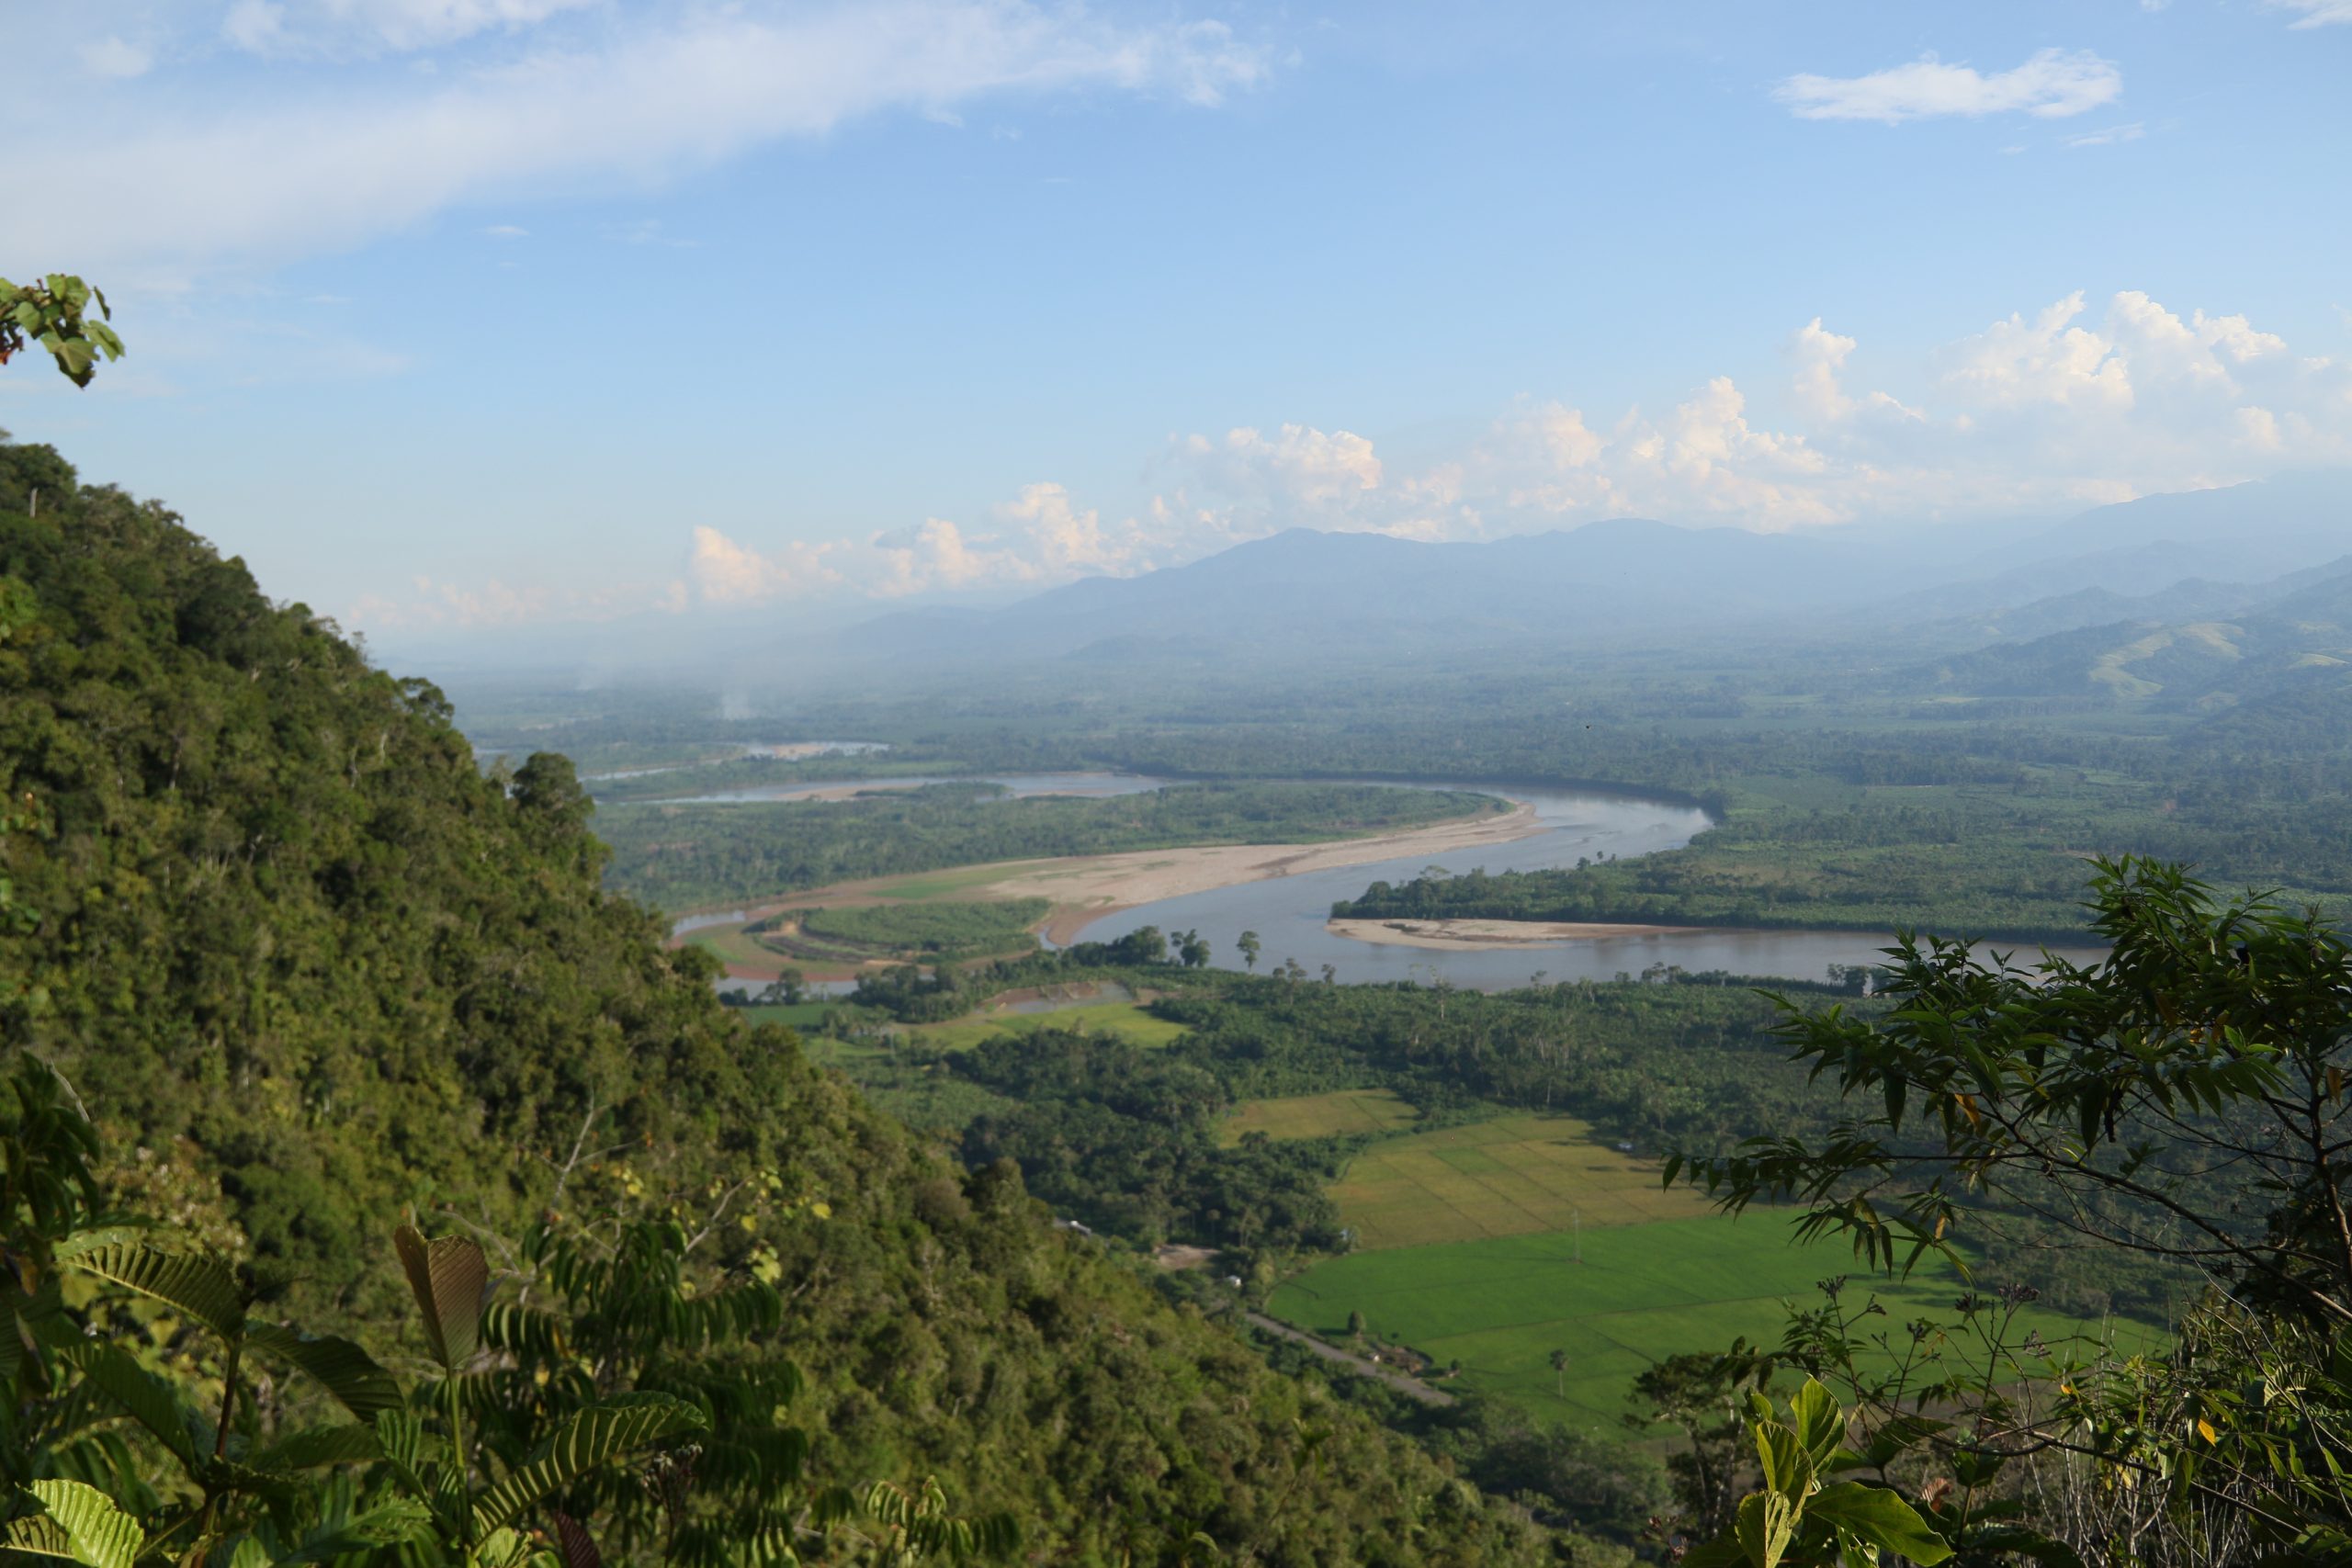 A view of the Huallaga River in Peru